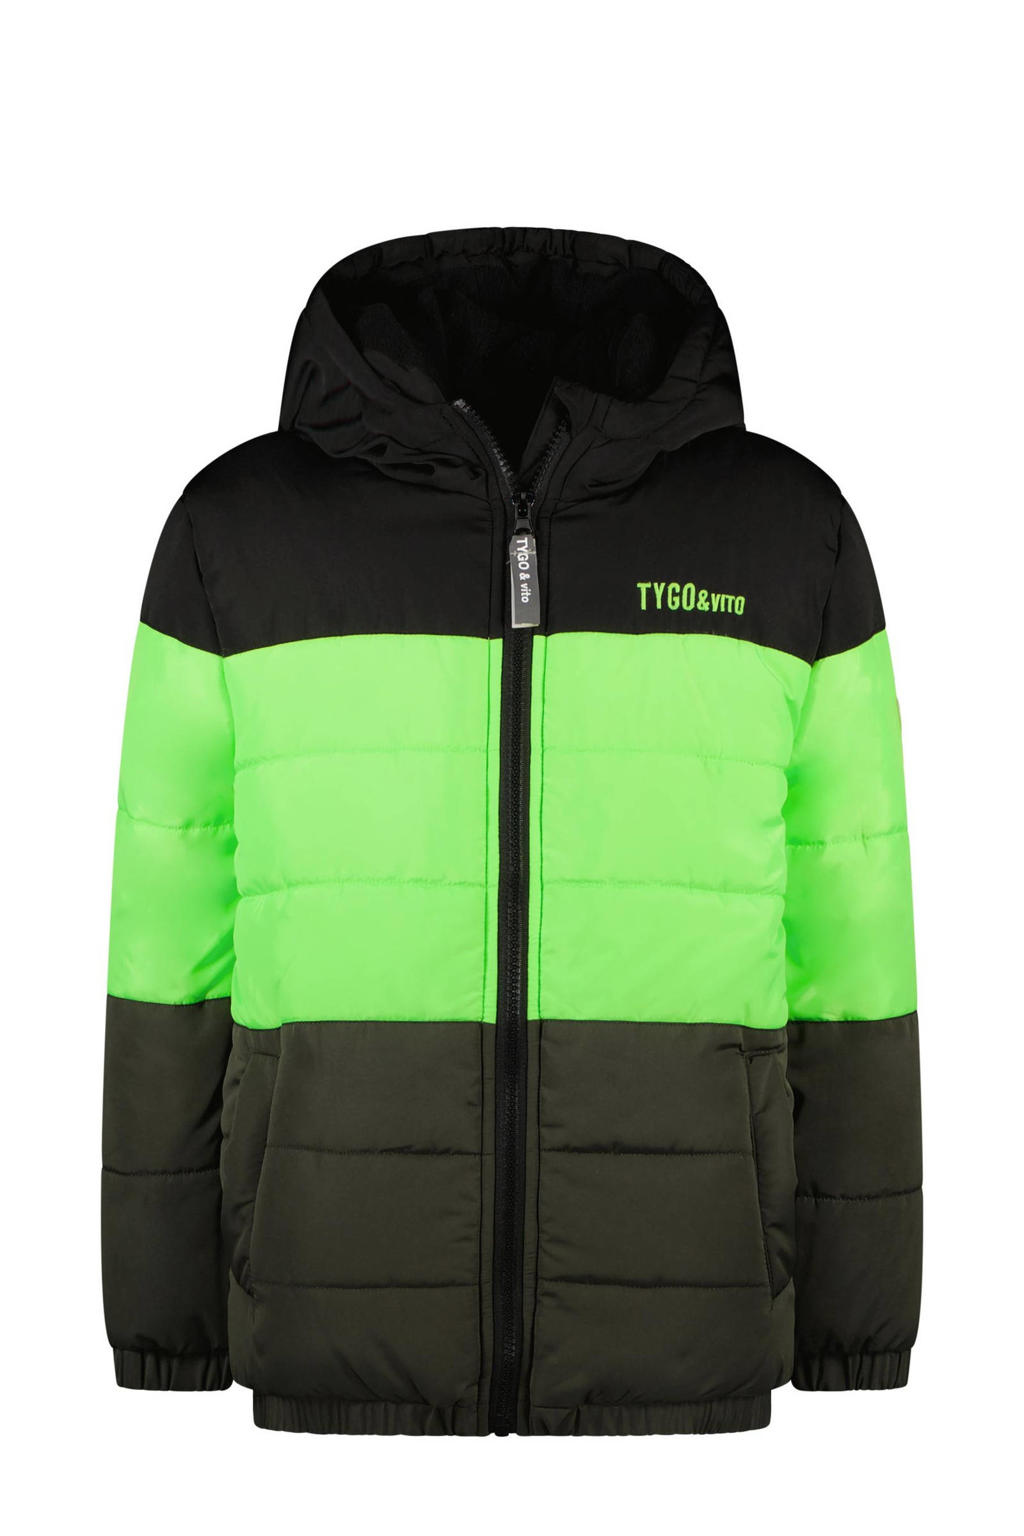 TYGO & vito gewatteerde winterjas van gerecycled polyester kaki/neon groen/zwart